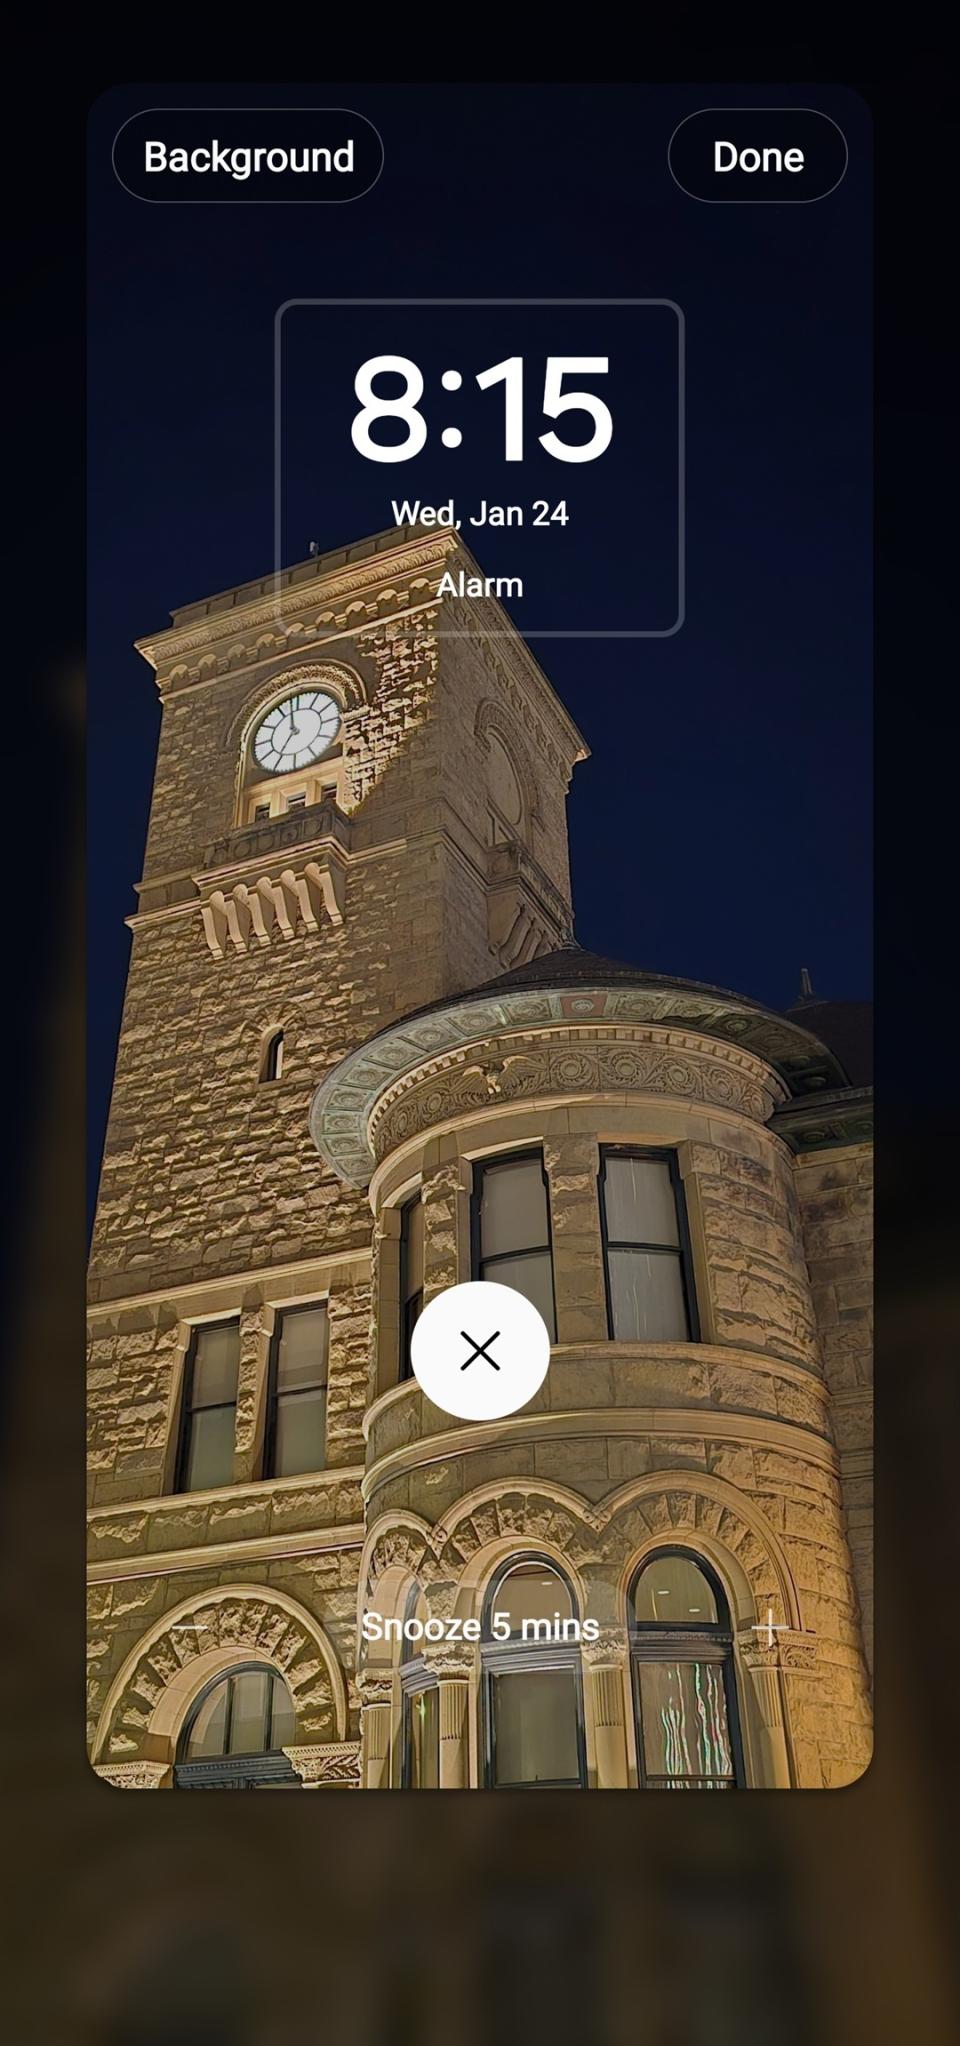 Custom alarm clock background